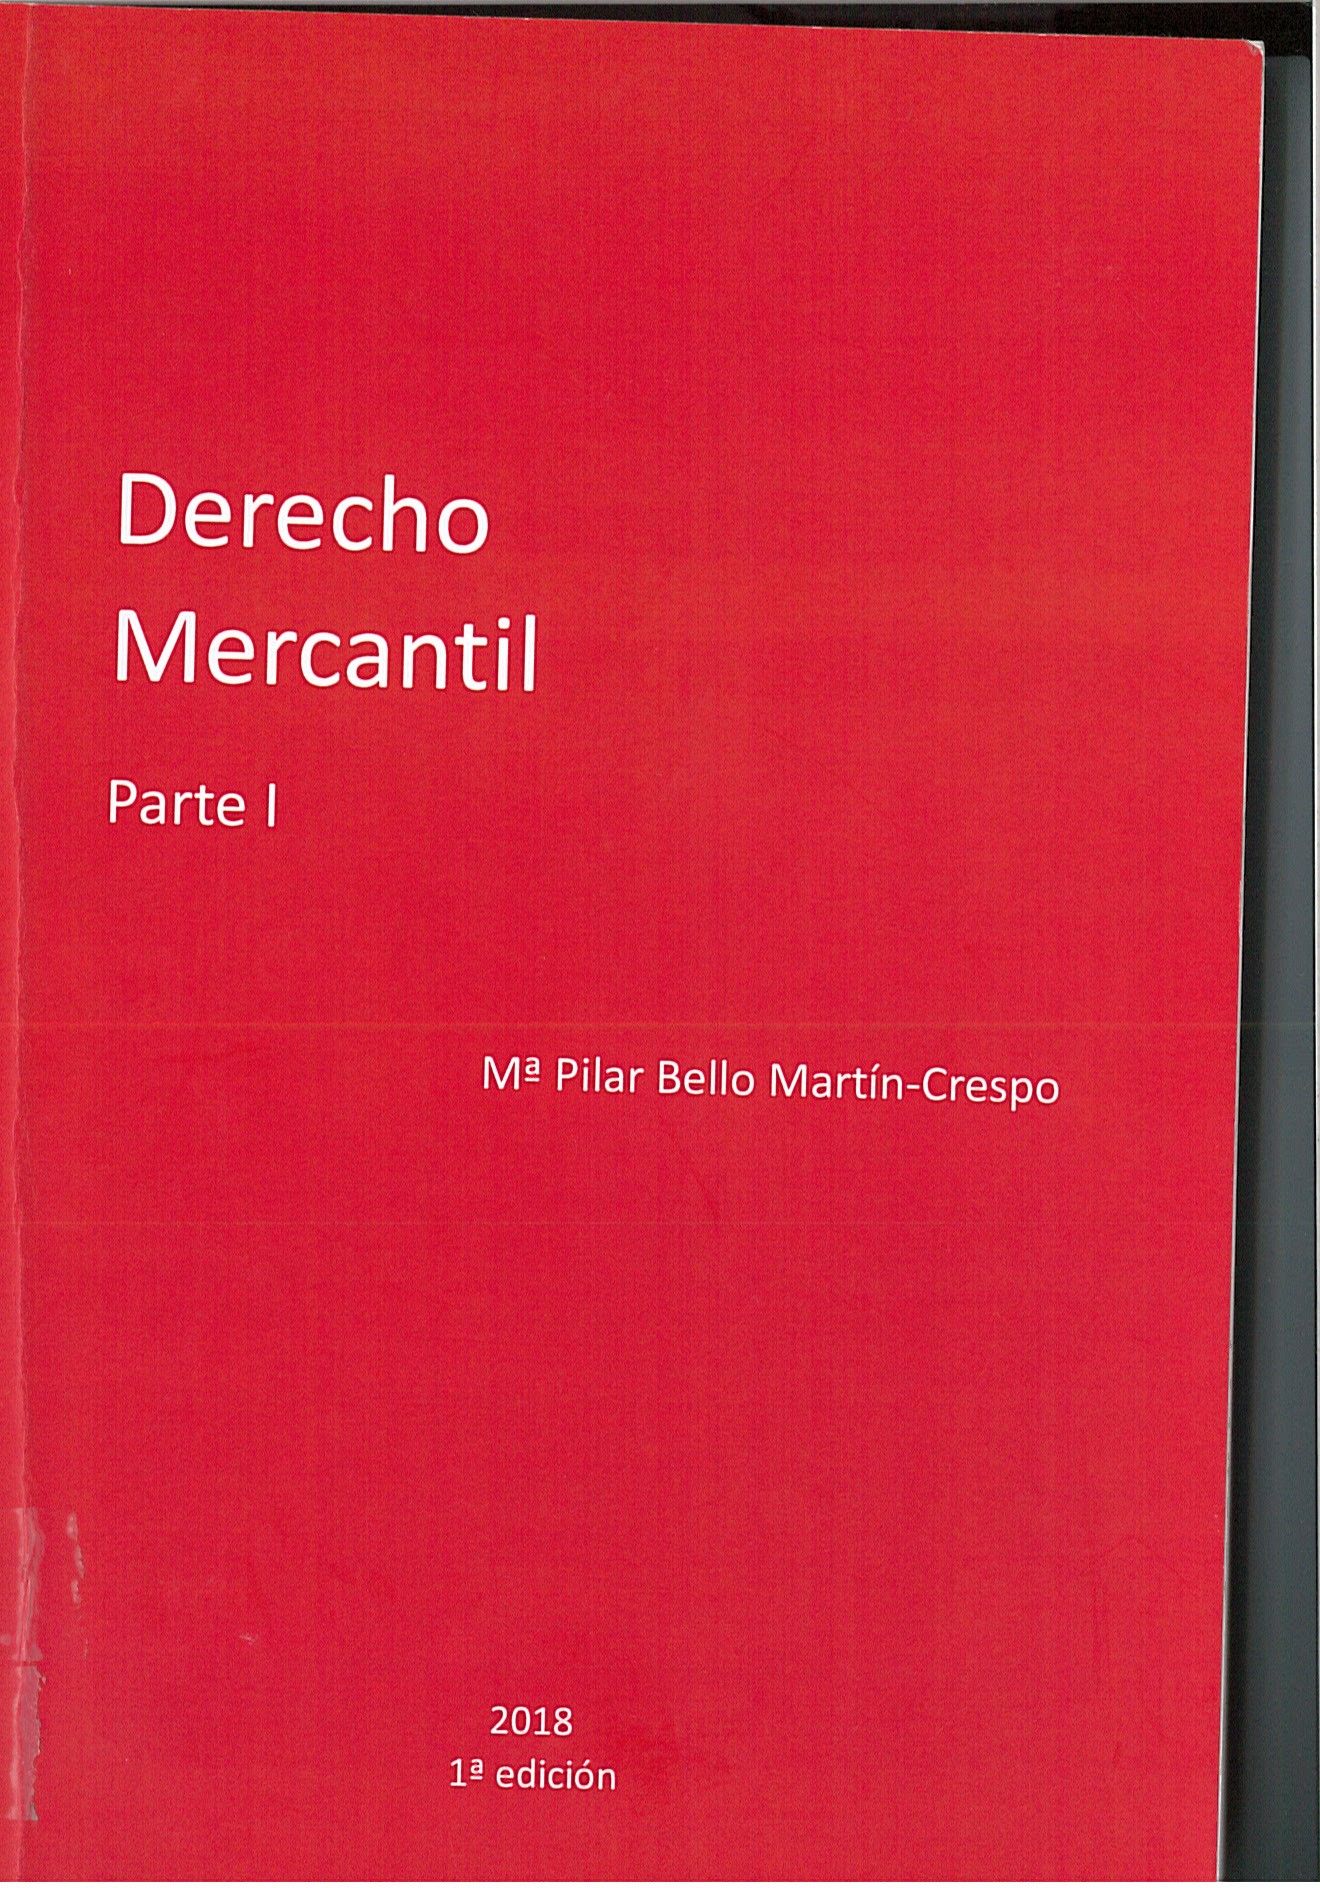 Imagen de portada del libro Derecho mercantil